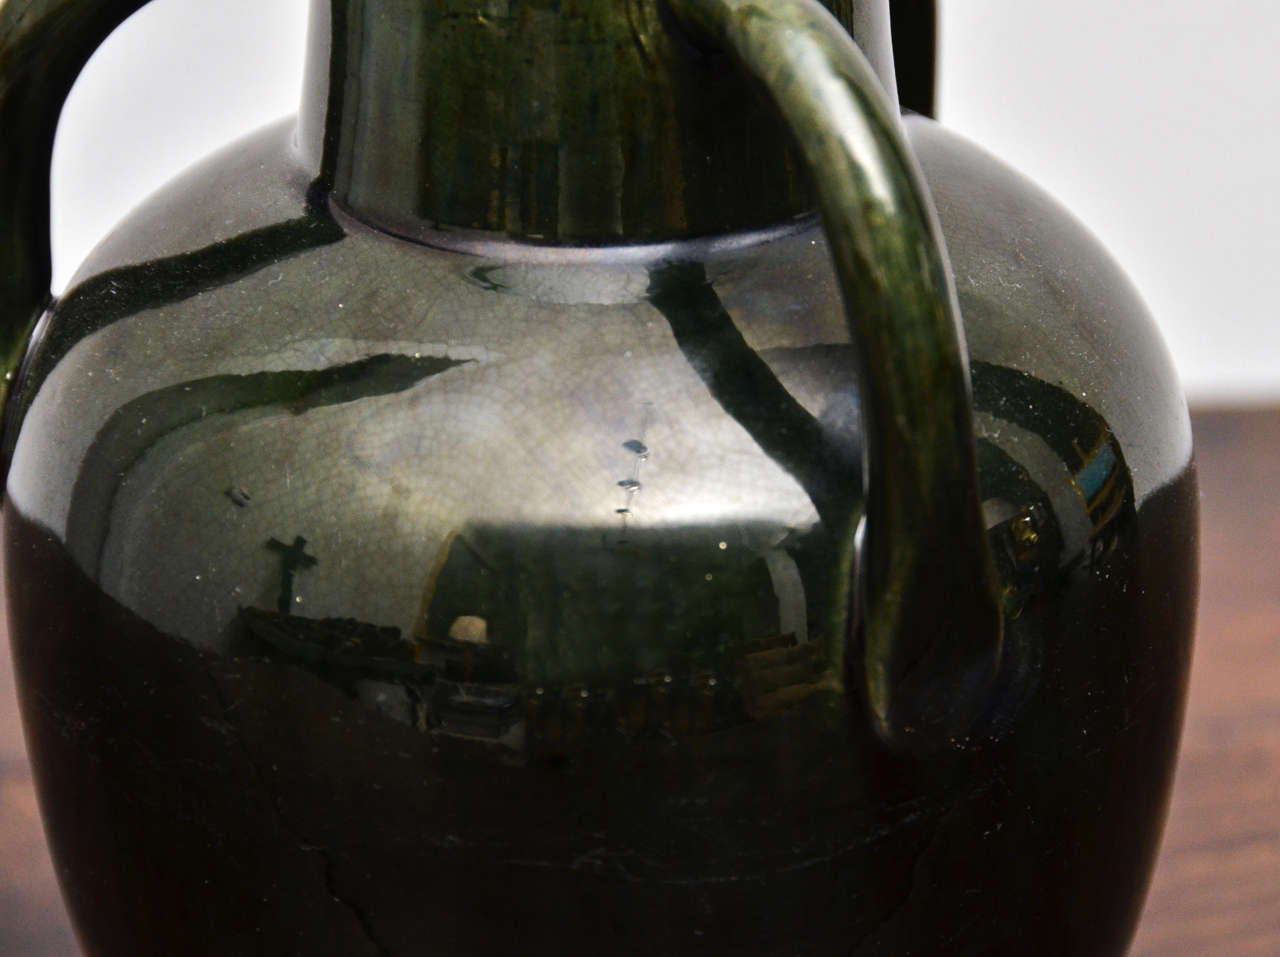 ceramic vase with handles